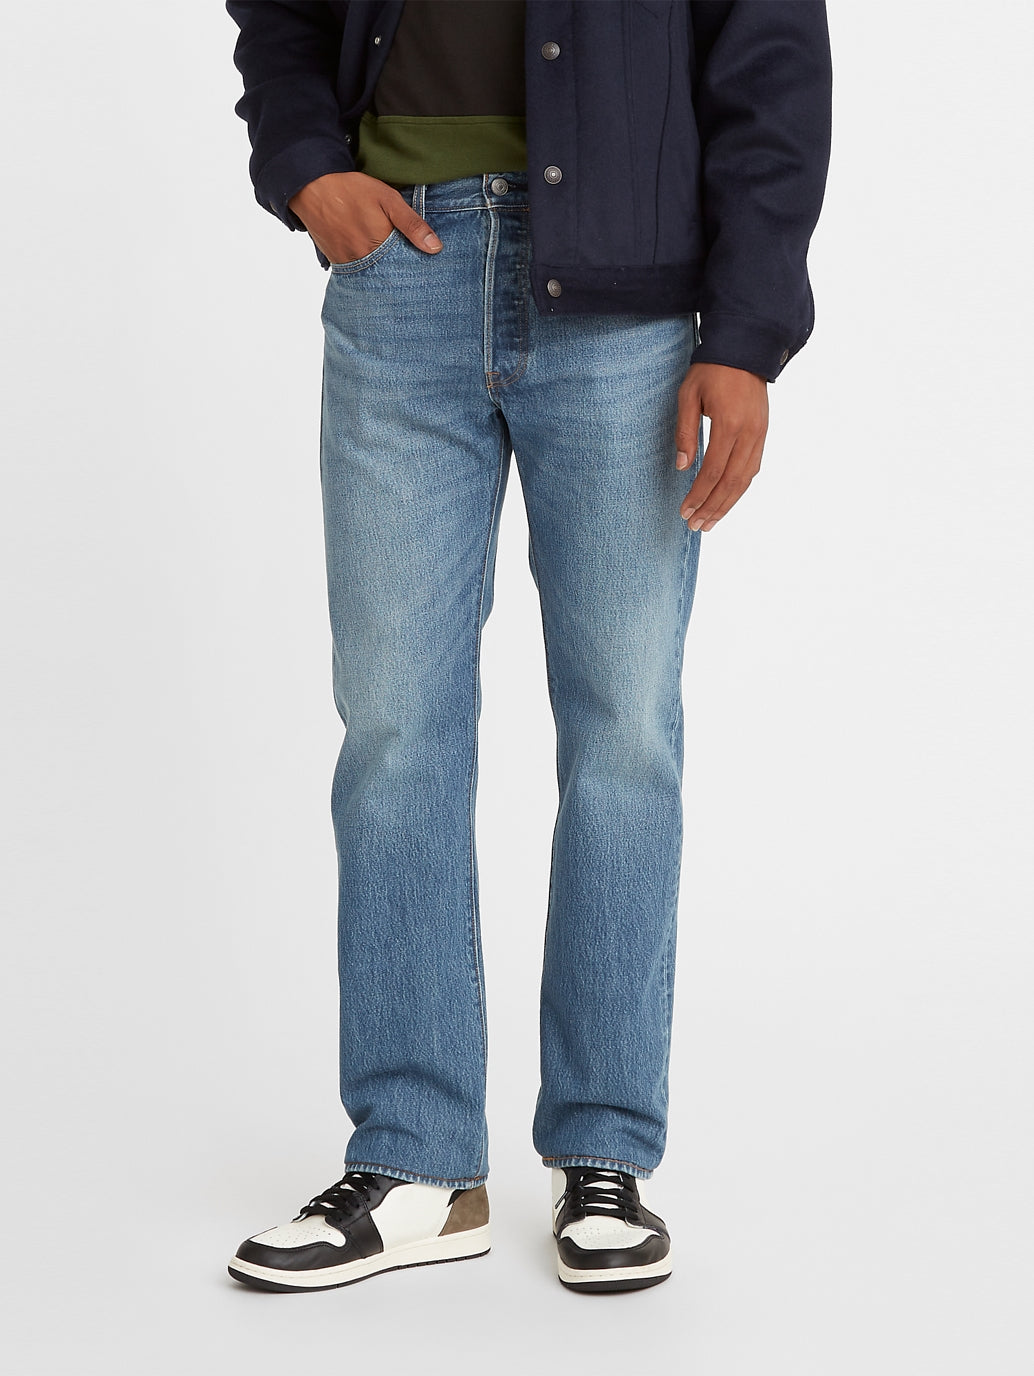 Men's 501 Light Indigo Regular Fit Jeans